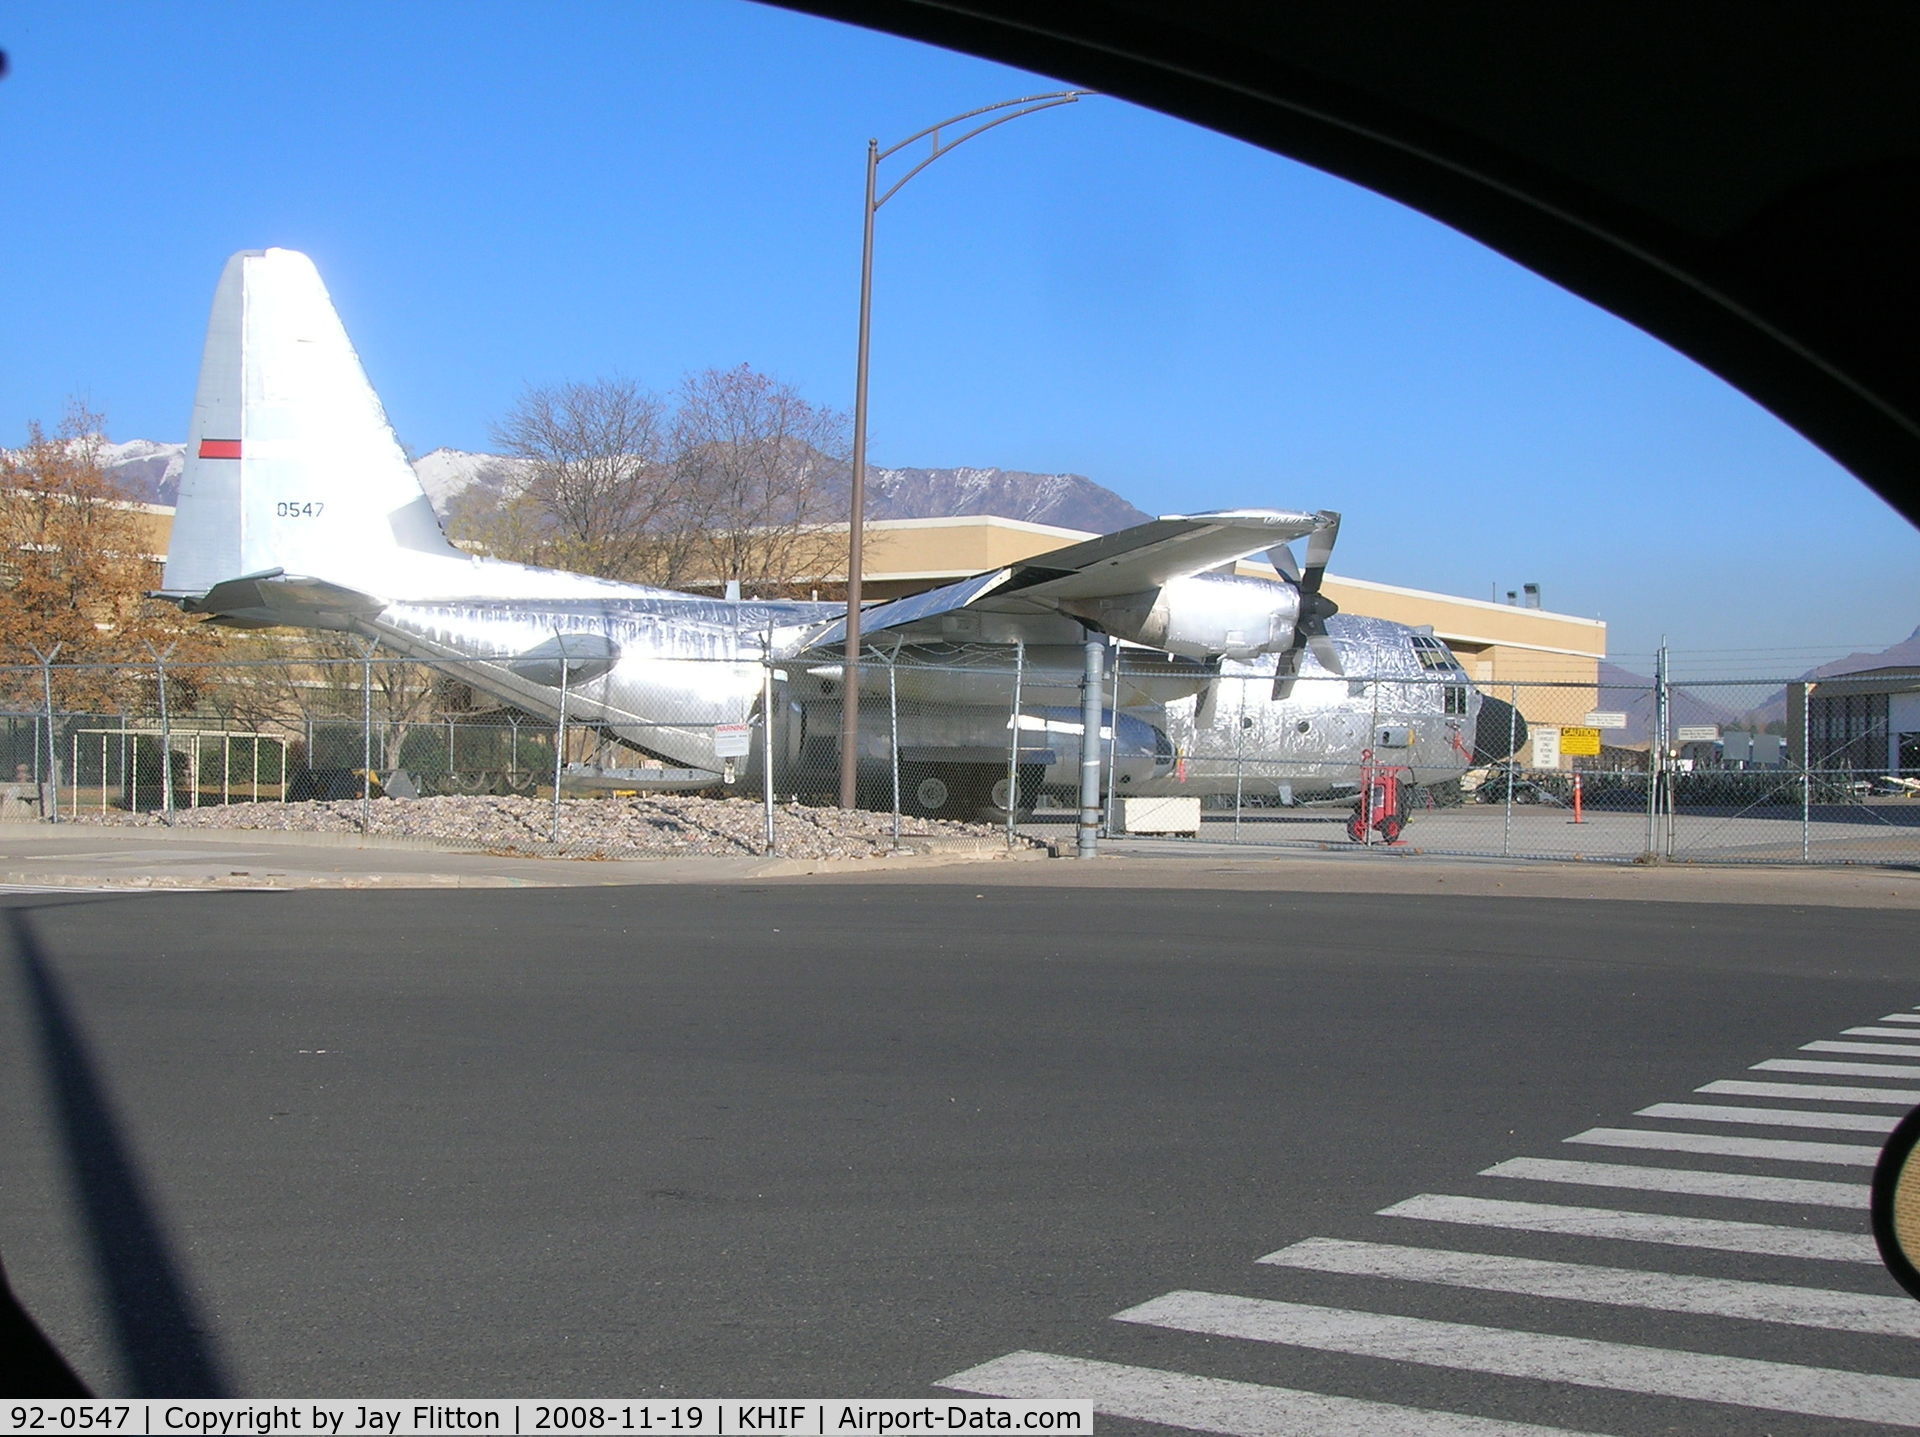 92-0547, 1992 Lockheed C-130H Hercules C/N 382-5332, C-130 C/N 382-5332. Ready for paint following heavy maintenance at the Ogden Air Logistics Center, Hill AFB, Utah